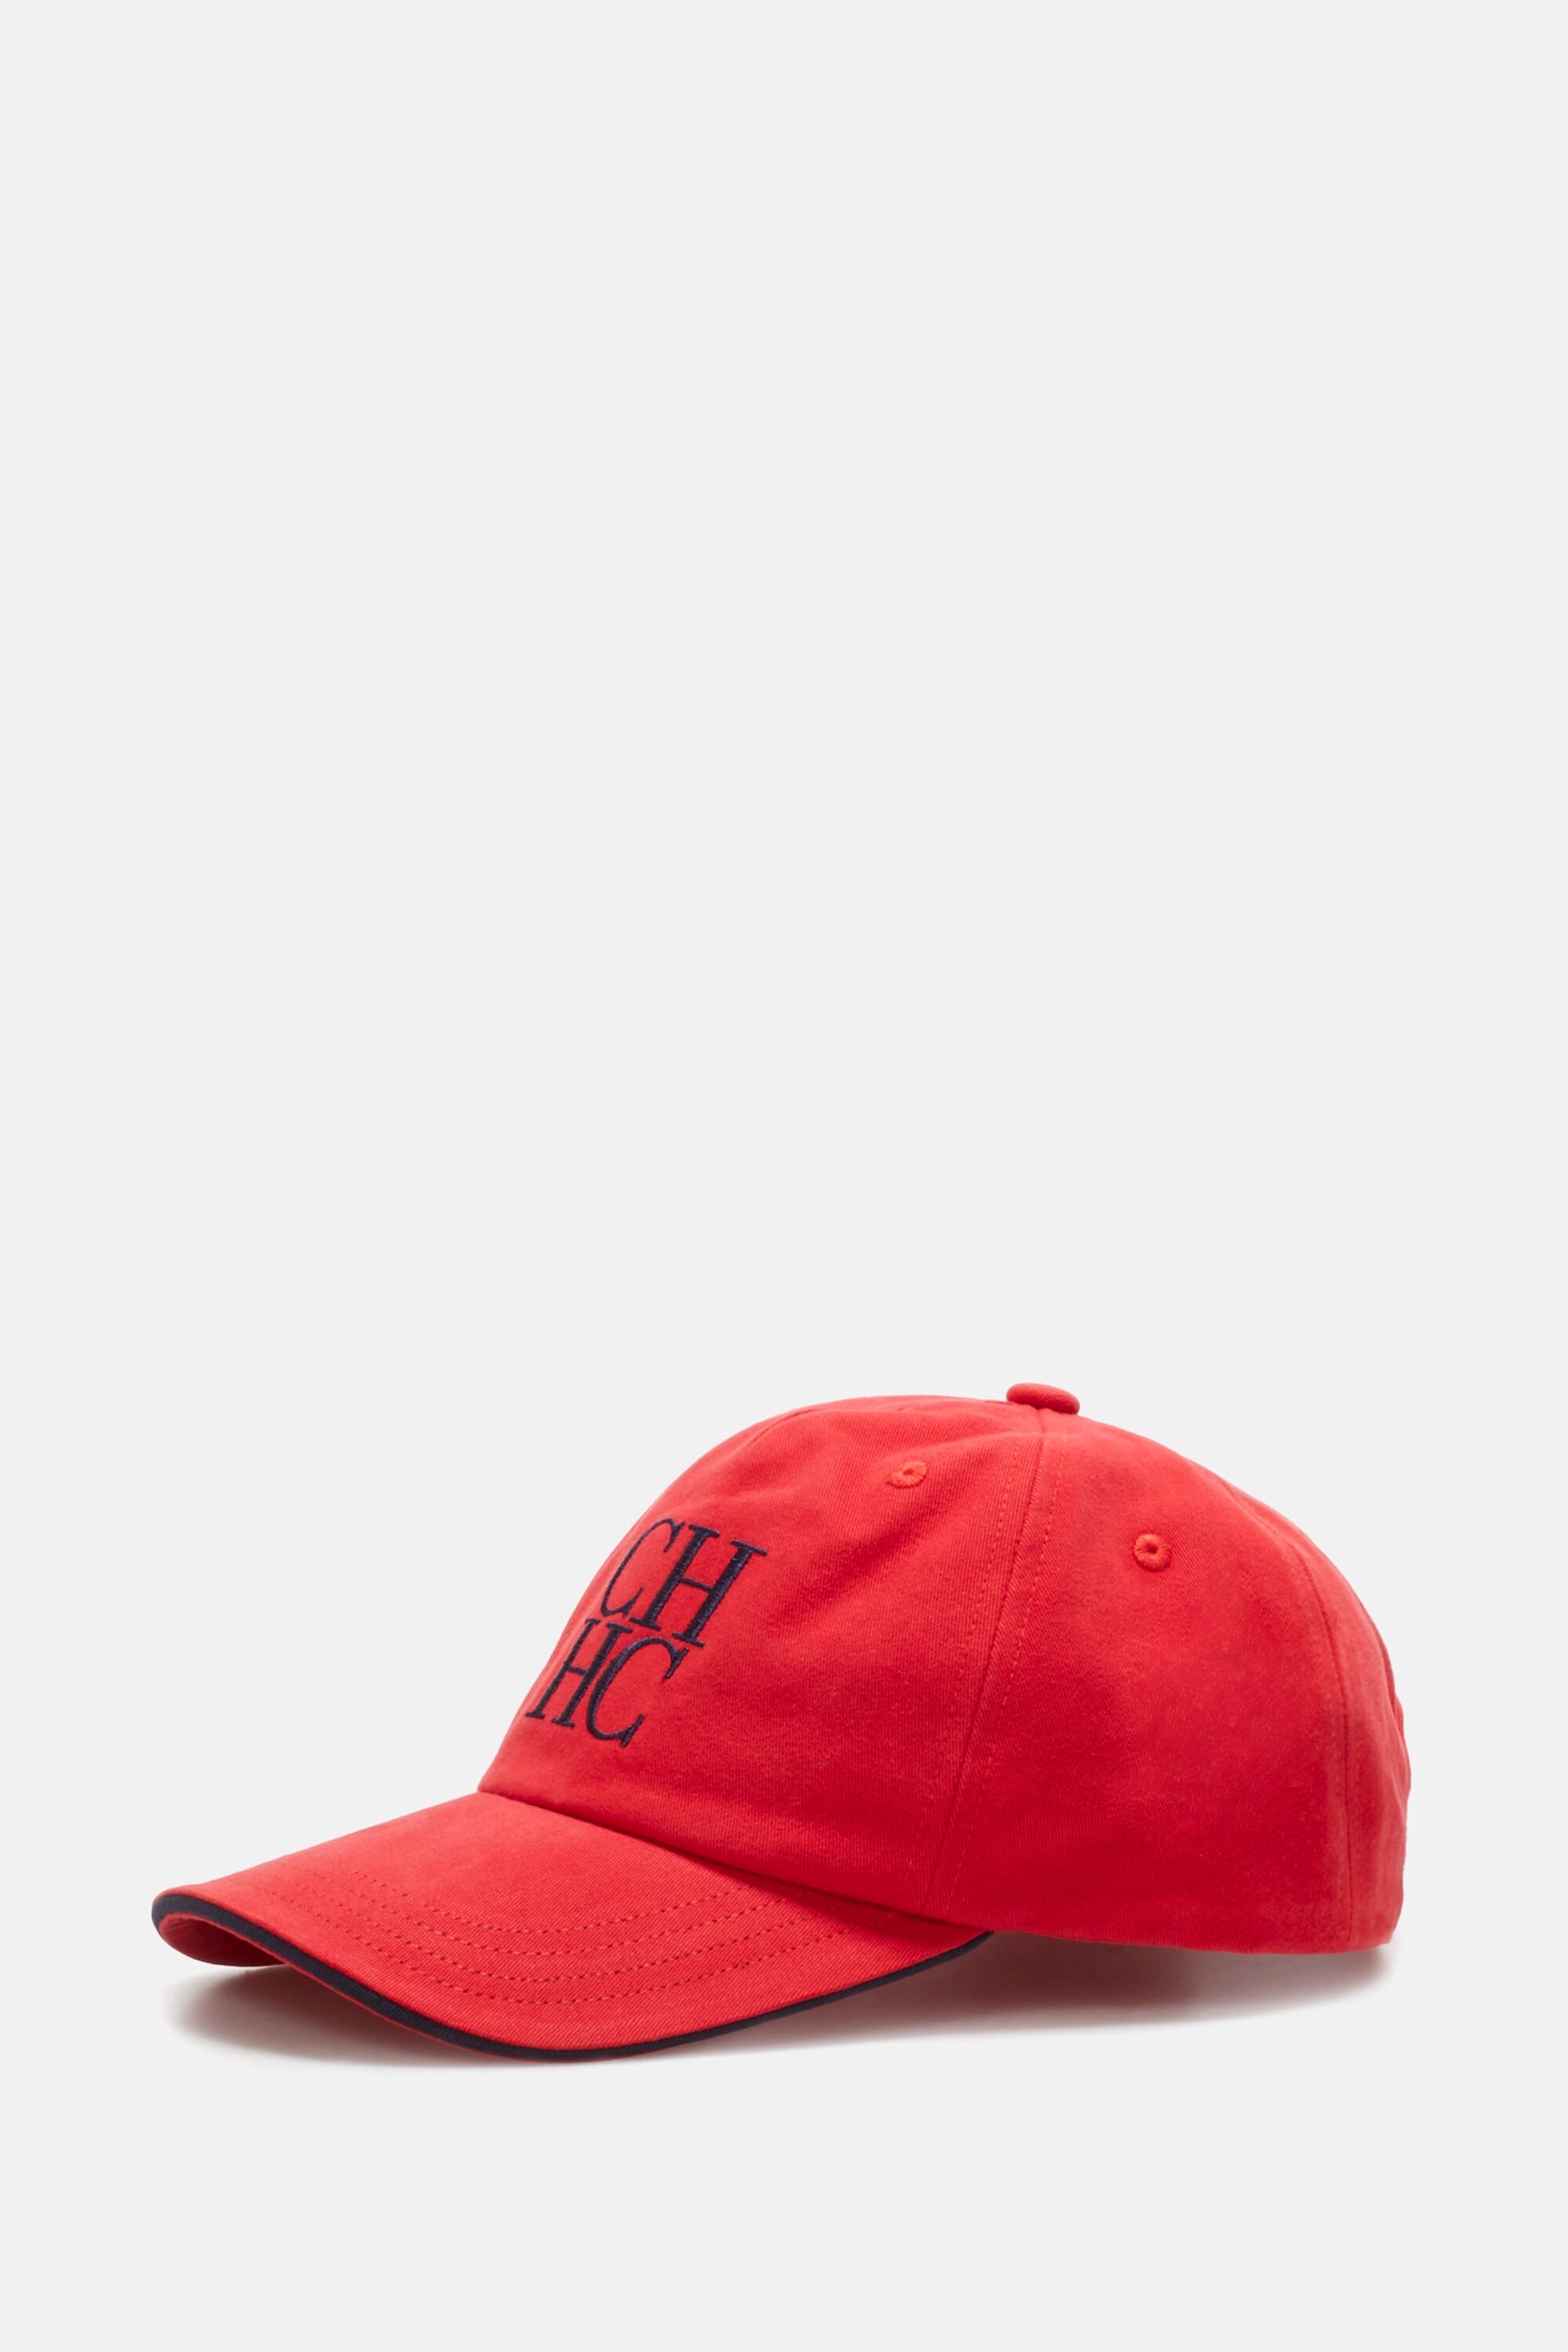 CH baseball cap